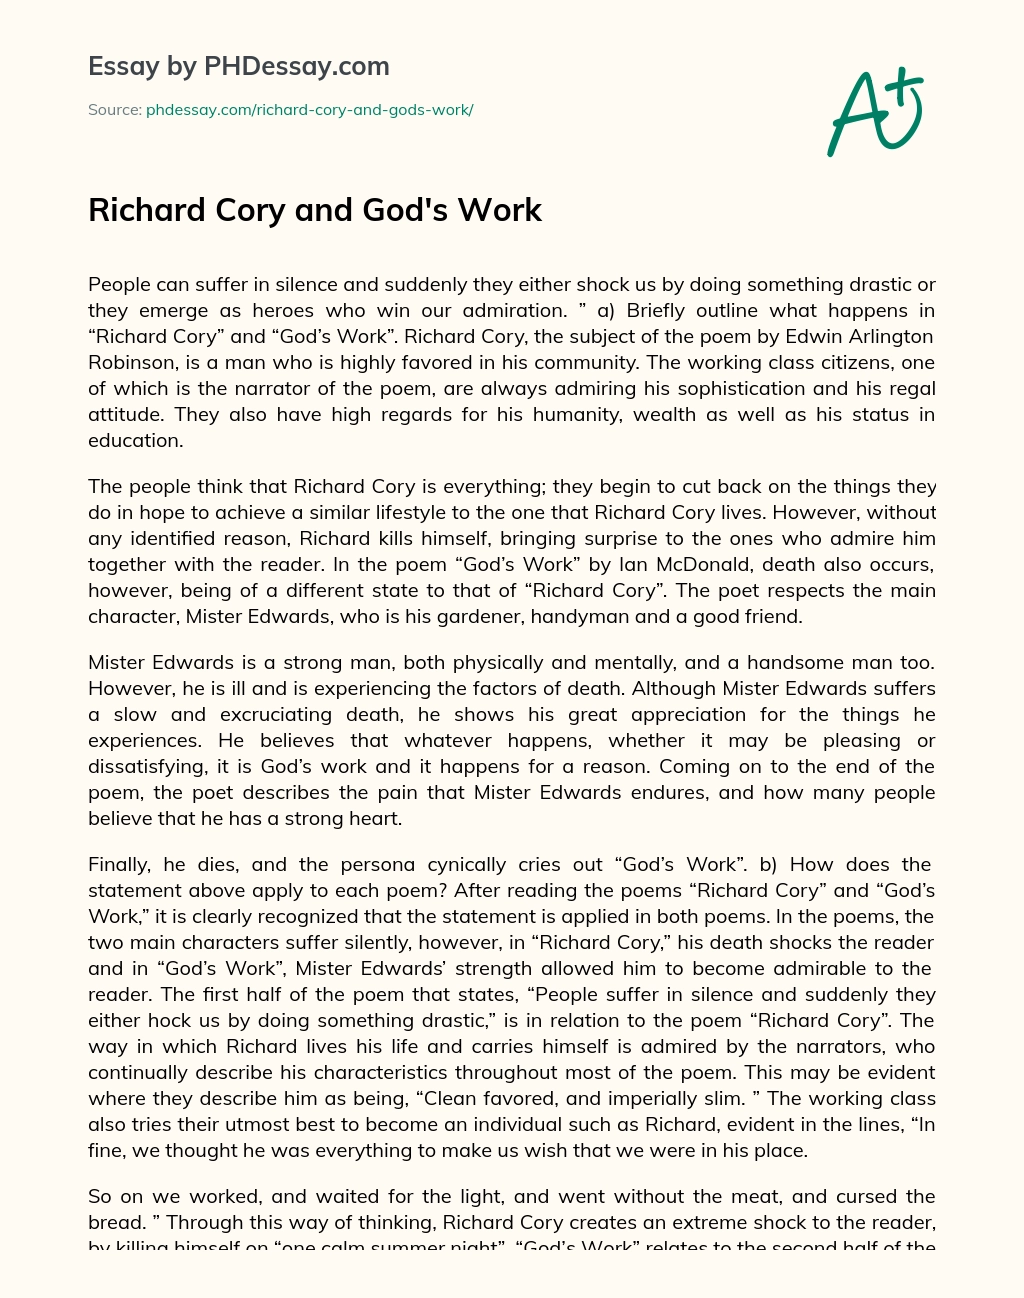 Richard Cory and God’s Work essay